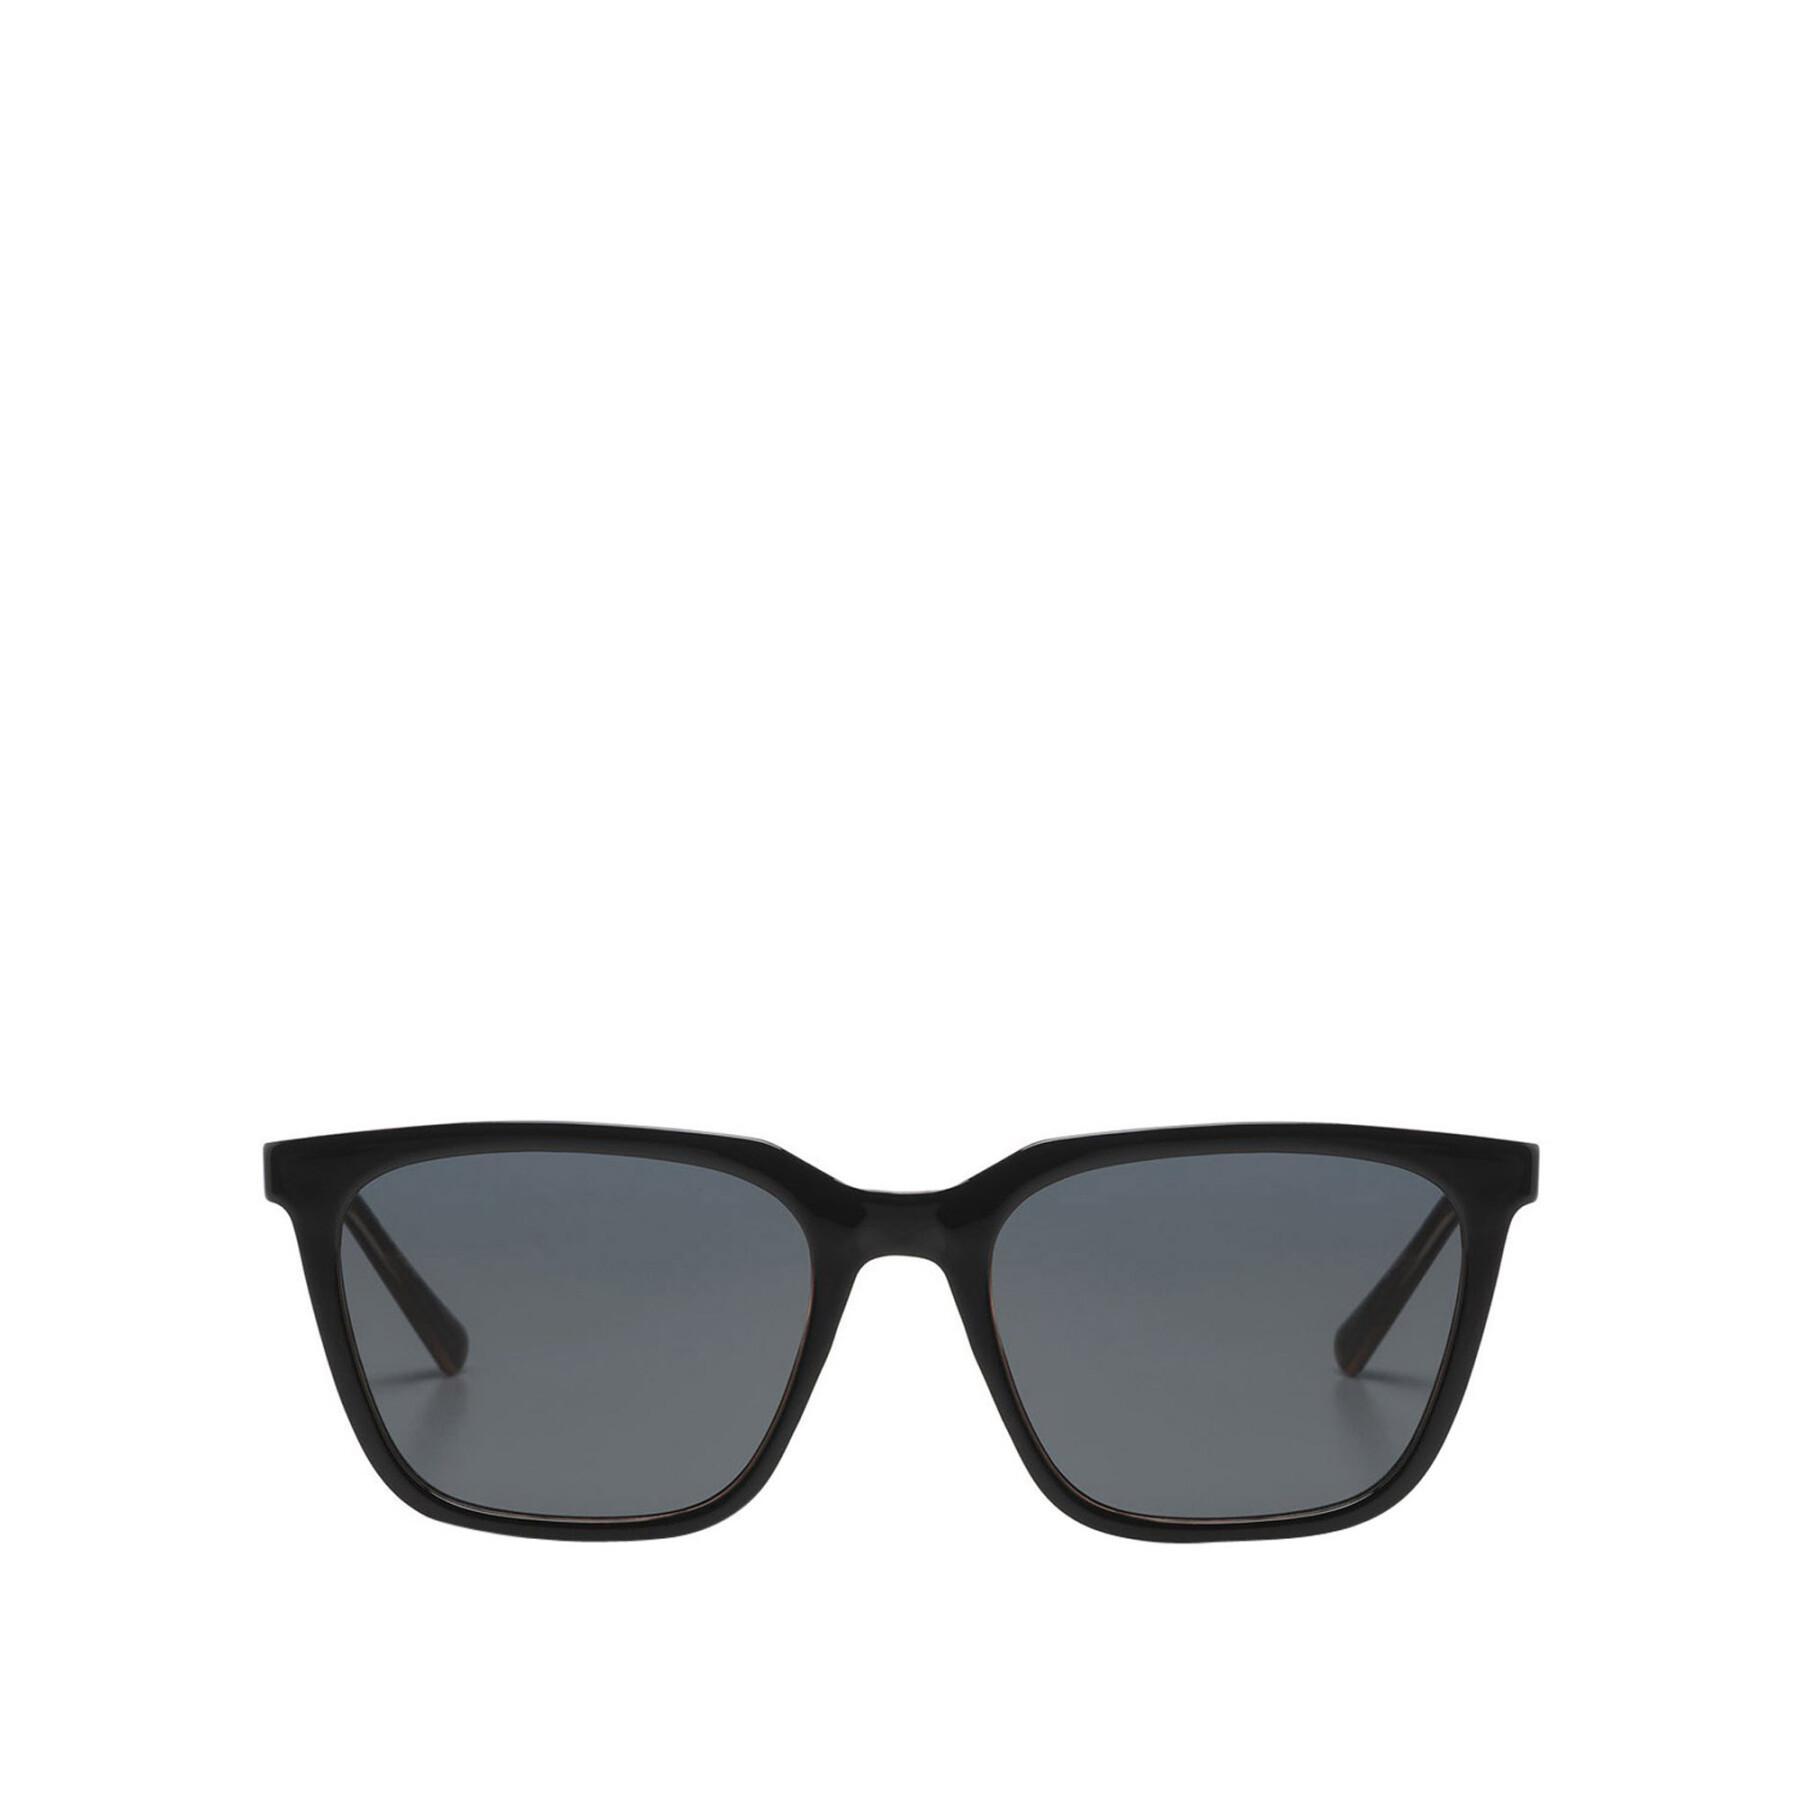 Sonnenbrille Komono Jay